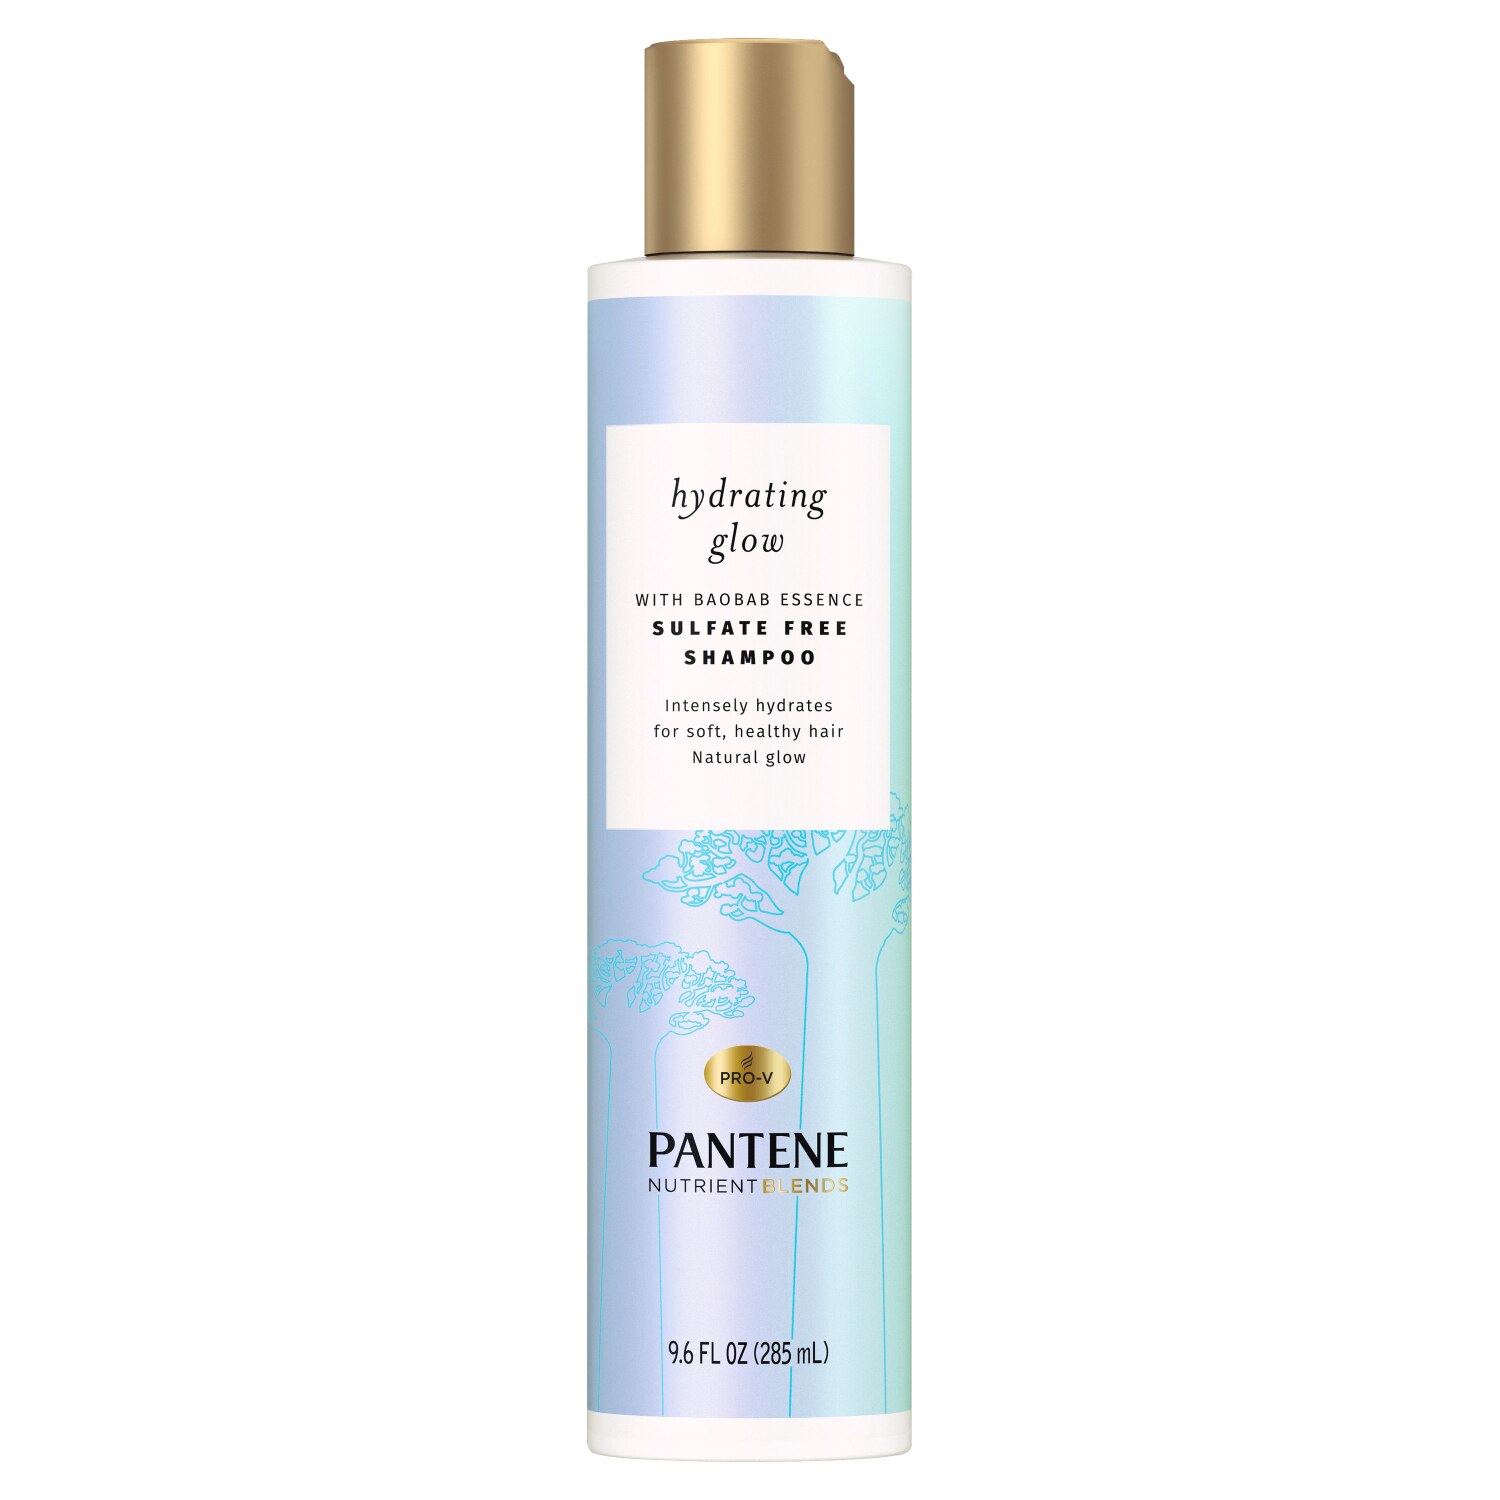  Pantene Hydrating Glow Sulfate & Silicone-Free Shampoo with Baobab Essence, 9.6 OZ 